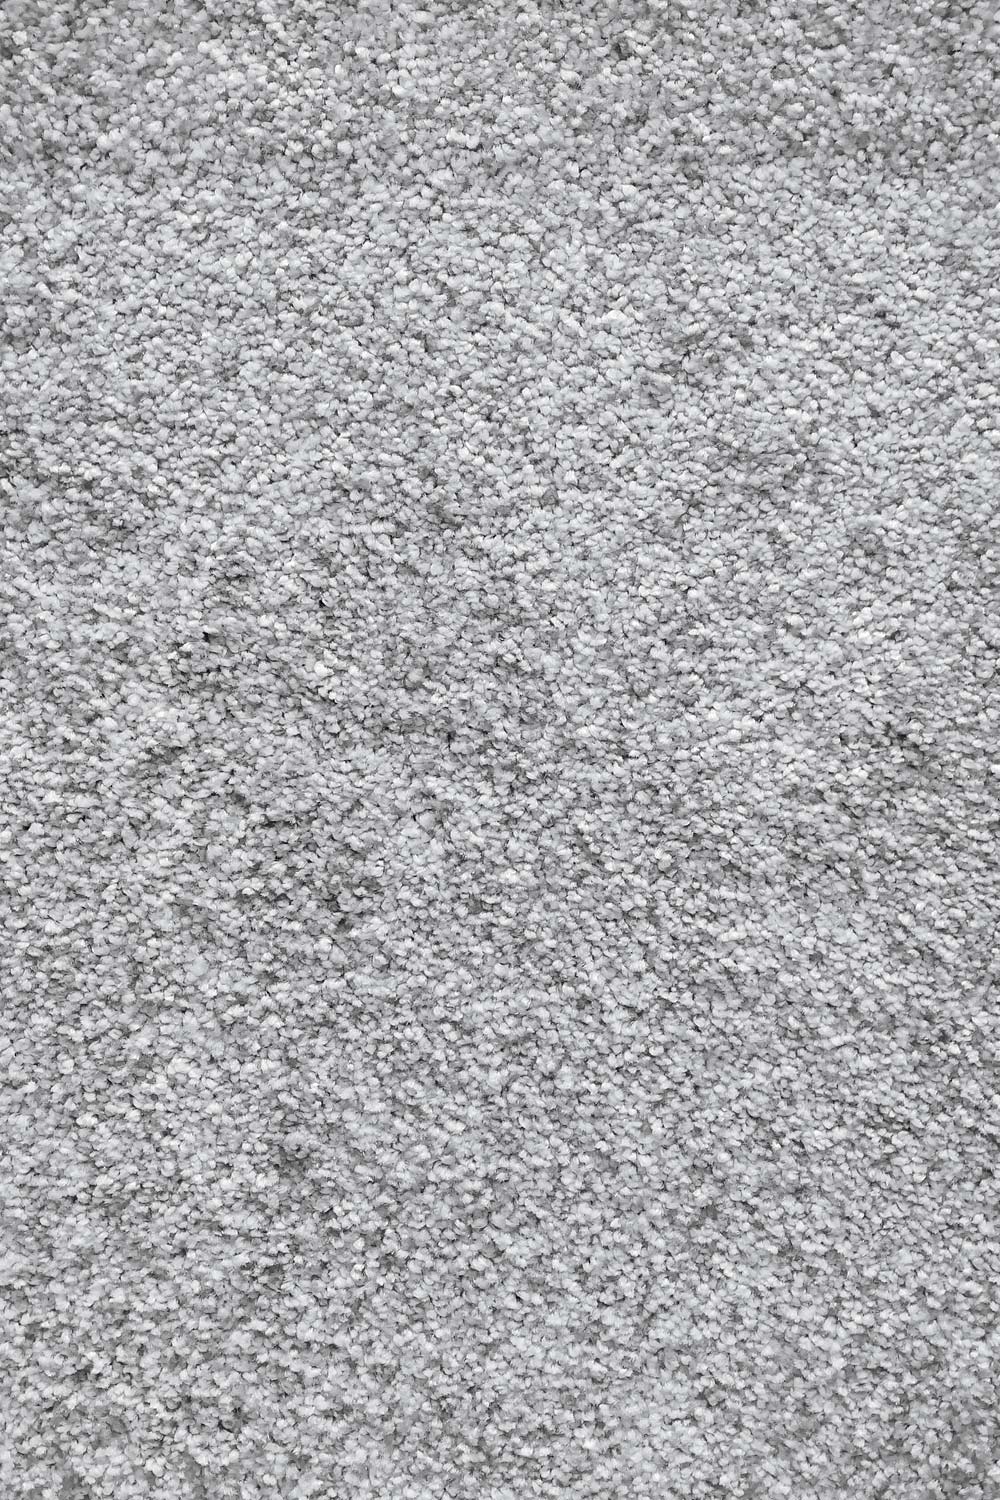 Metrážový koberec GLORIA 09 400 cm